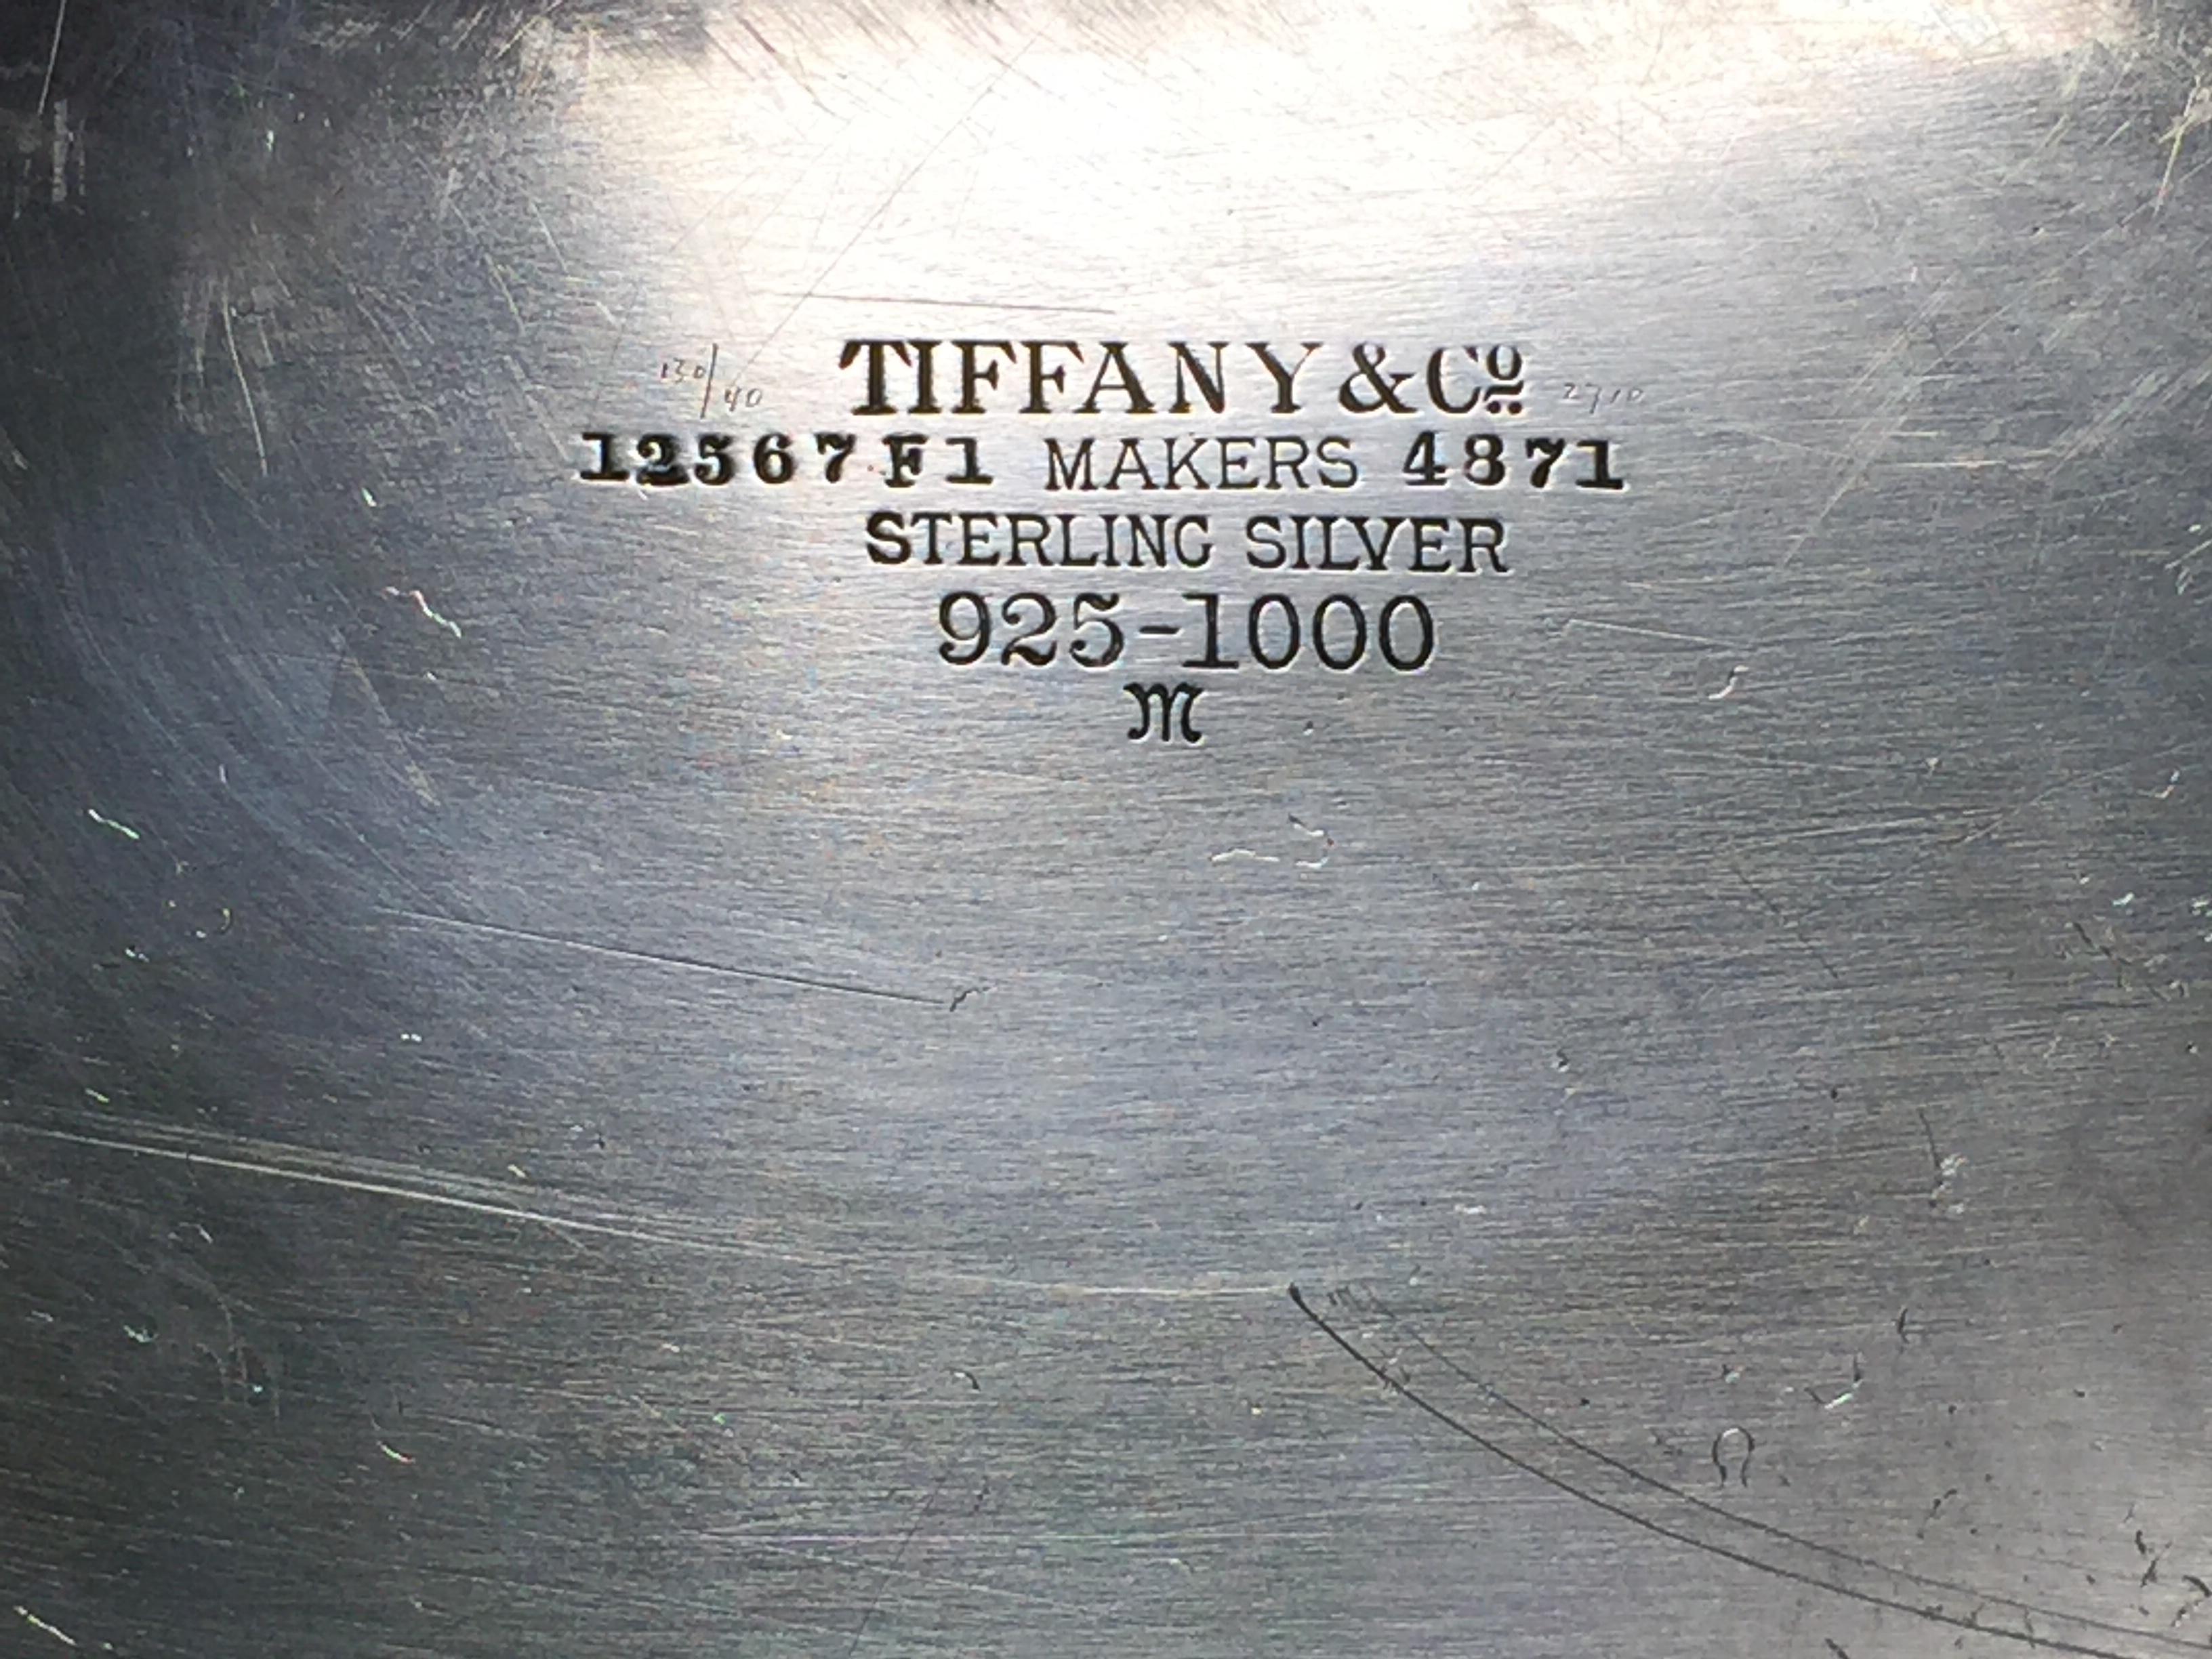 Tiffany & Co. 8-Piece Sterling Silver Tea / Coffee Service in Art Deco Style 14